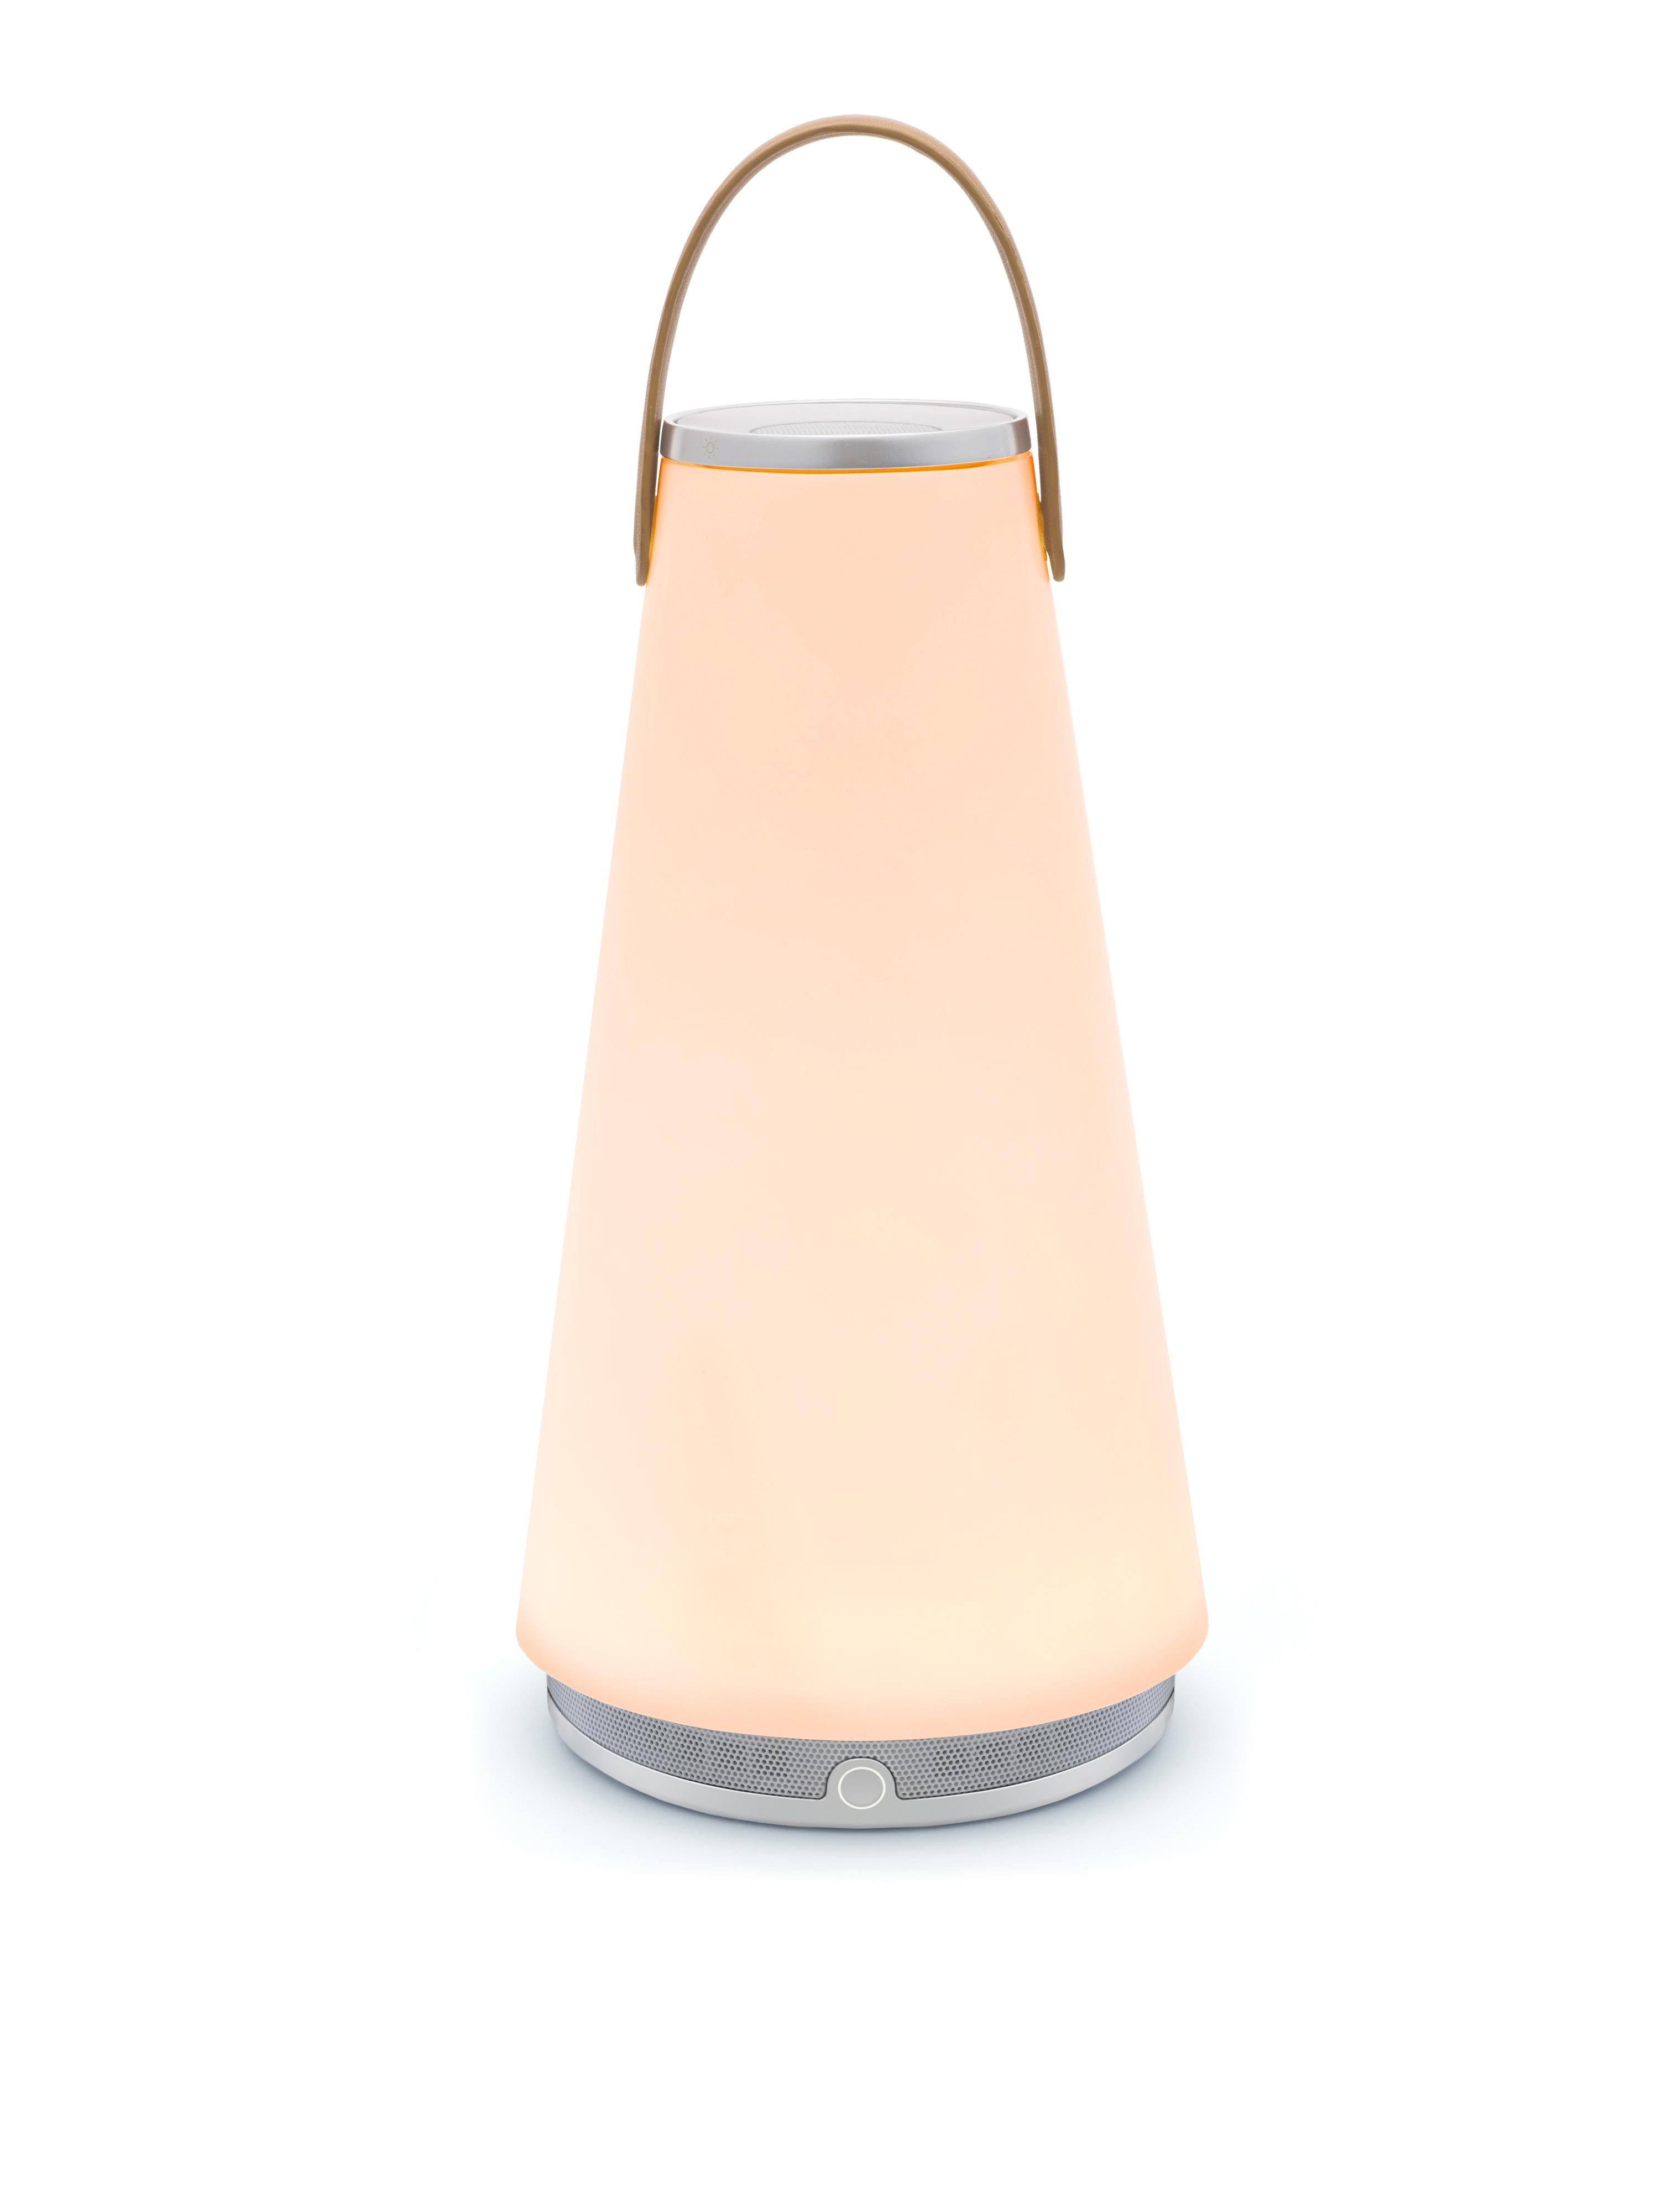 Modern Uma Sound Lantern in Aluminium and Tan by Pablo Designs For Sale